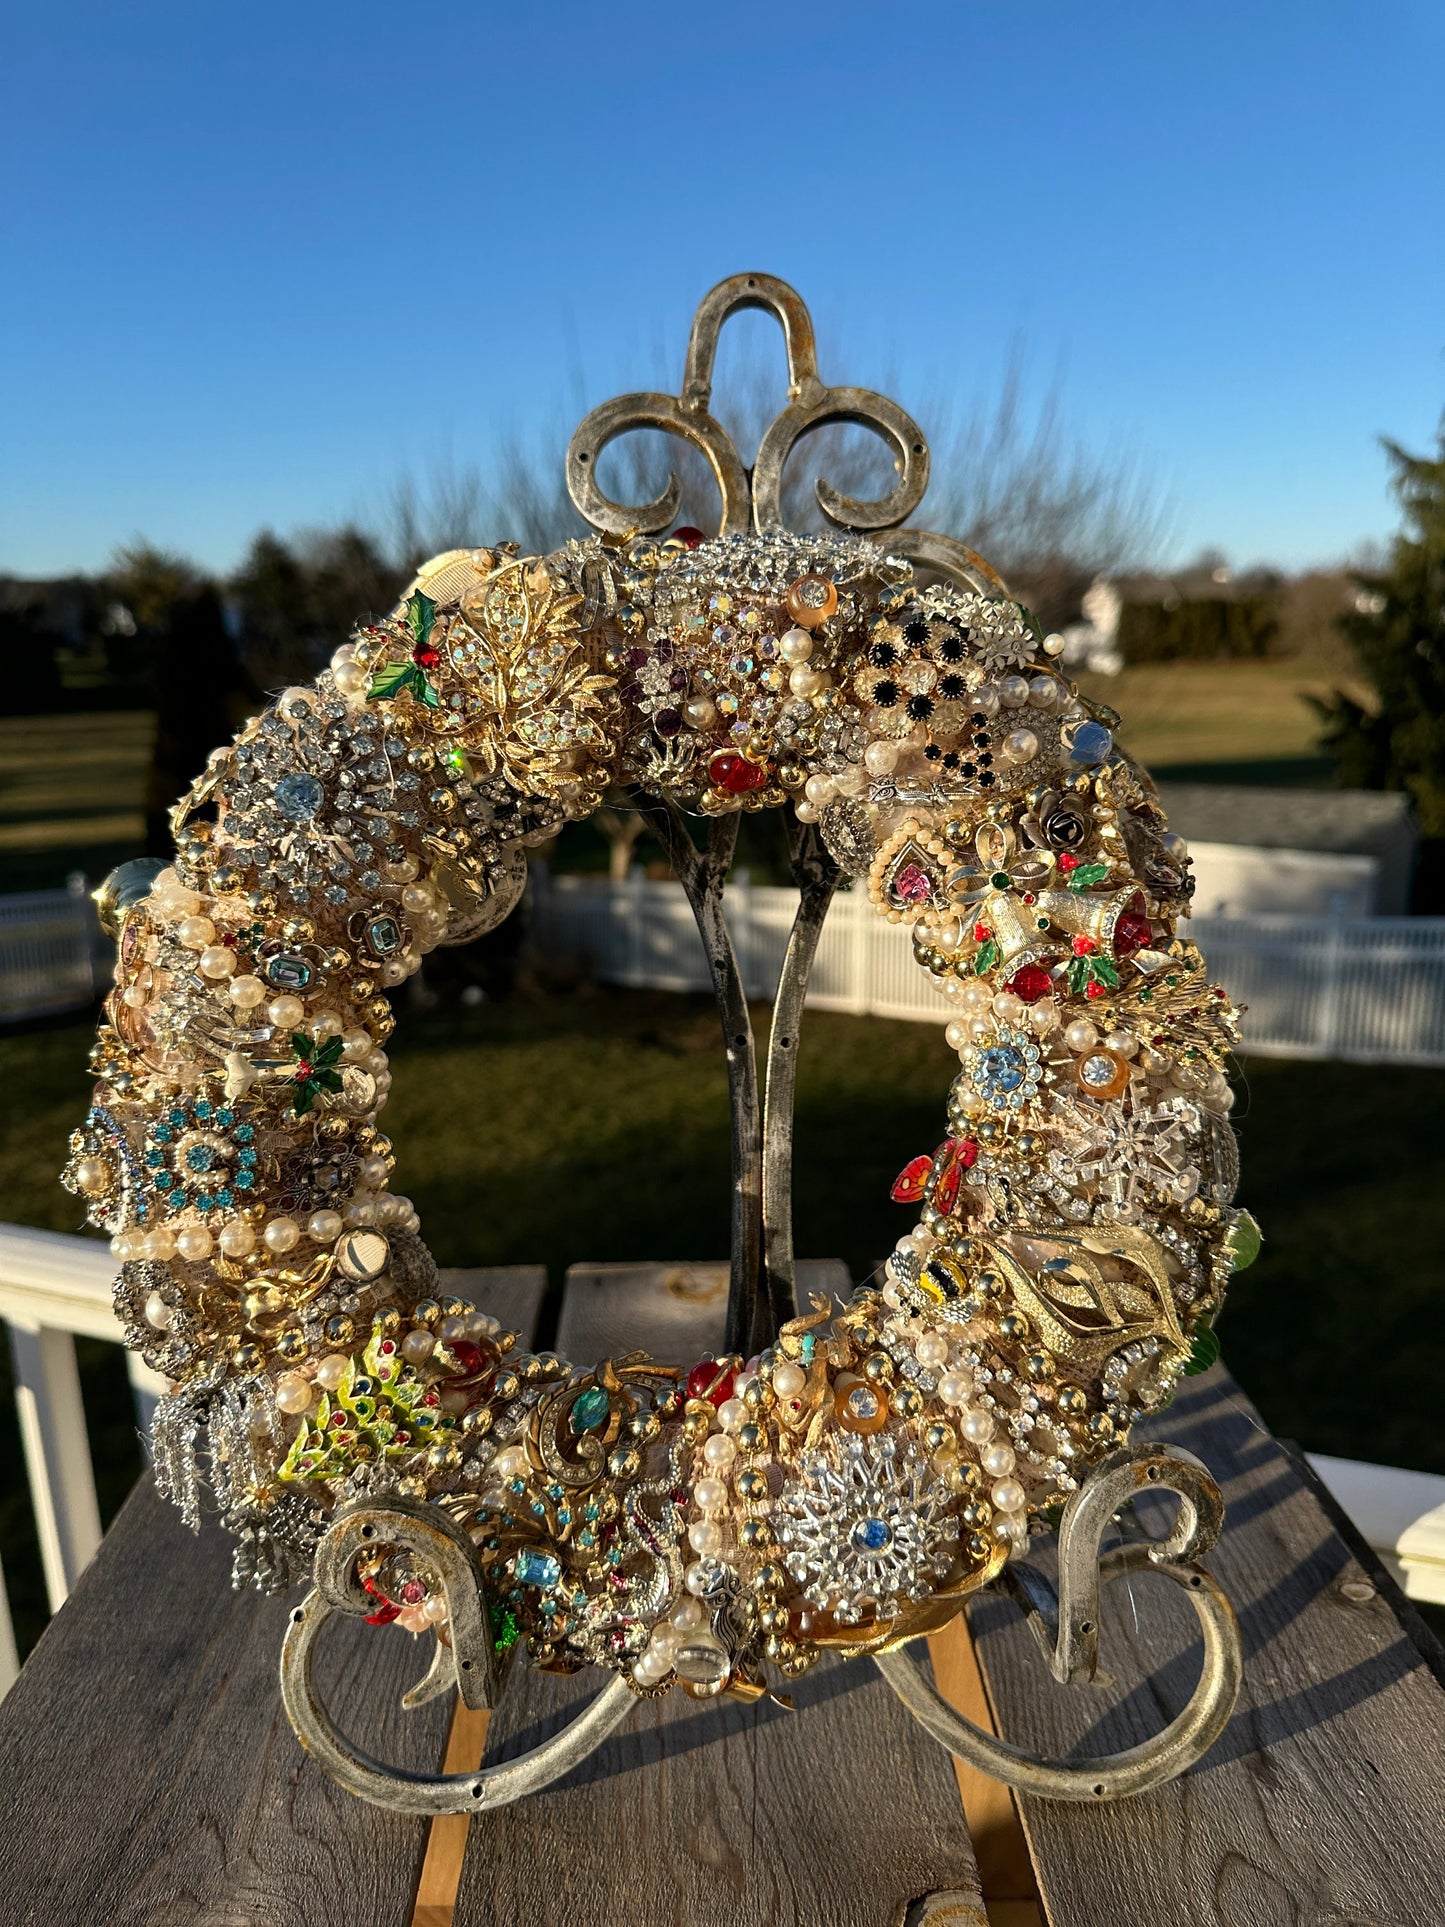 Vintage Jewelry Wreath Art | Vintage Brooches Earrings Md Pins